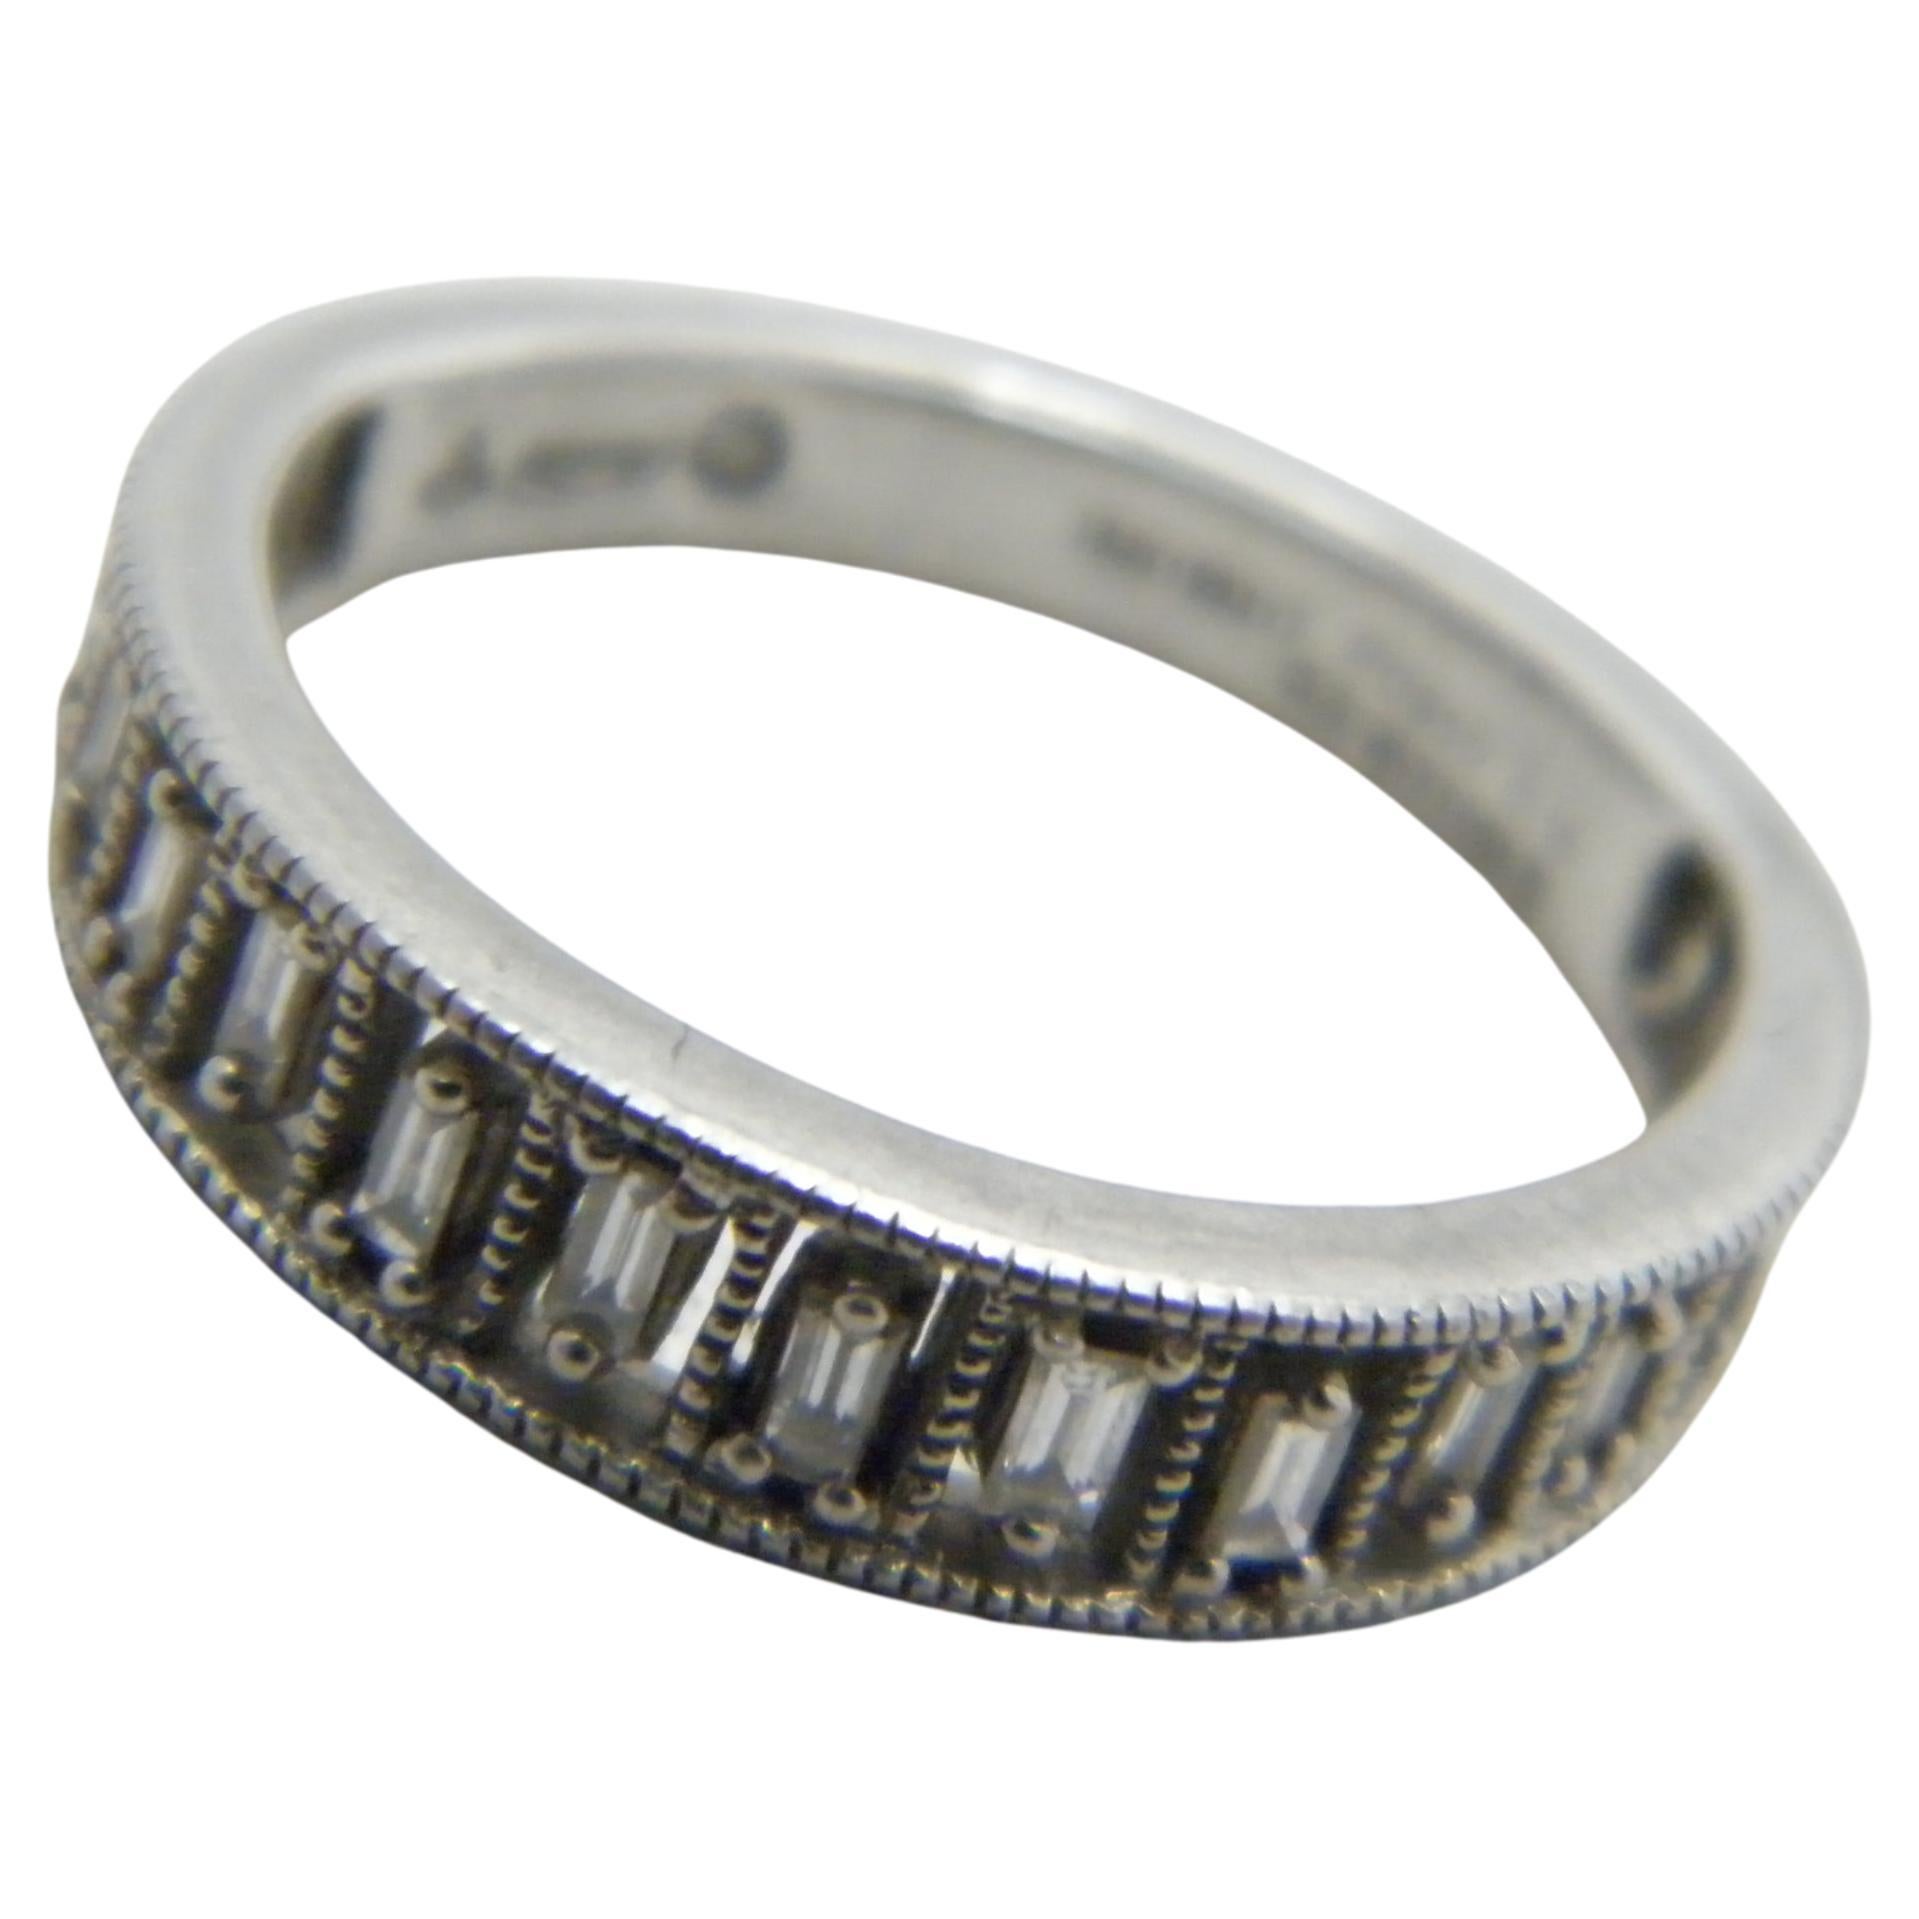 Vintage Palladium Diamond Greek Key Ring 950 Purity Band Size J 4.75 Wedding For Sale